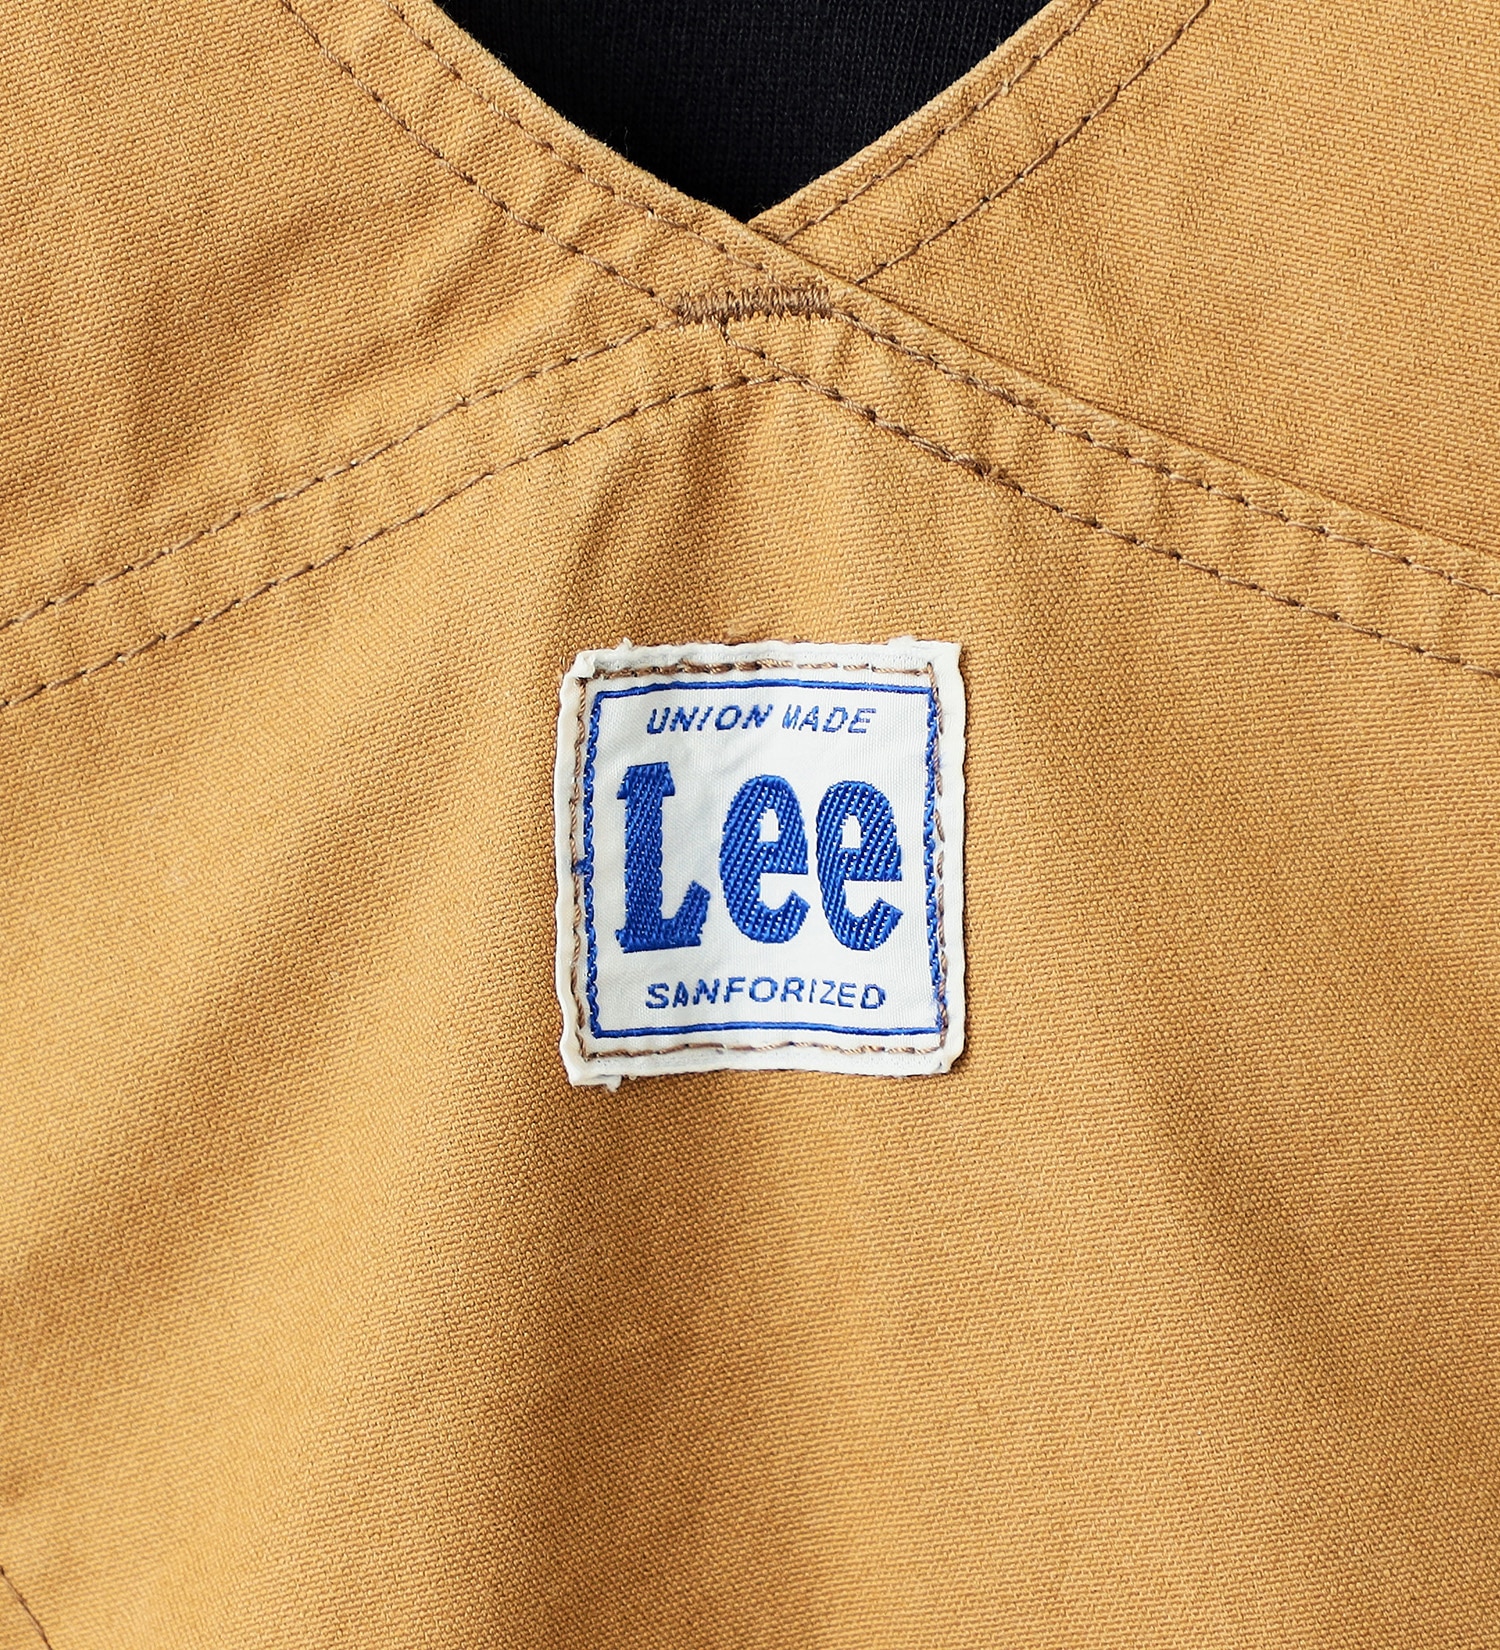 Lee(リー)の【Lee OUTDOORS】ダブルニー アウトドアオーバーオールパンツ|オールインワン/サロペット/オーバーオール/メンズ|ブラウン